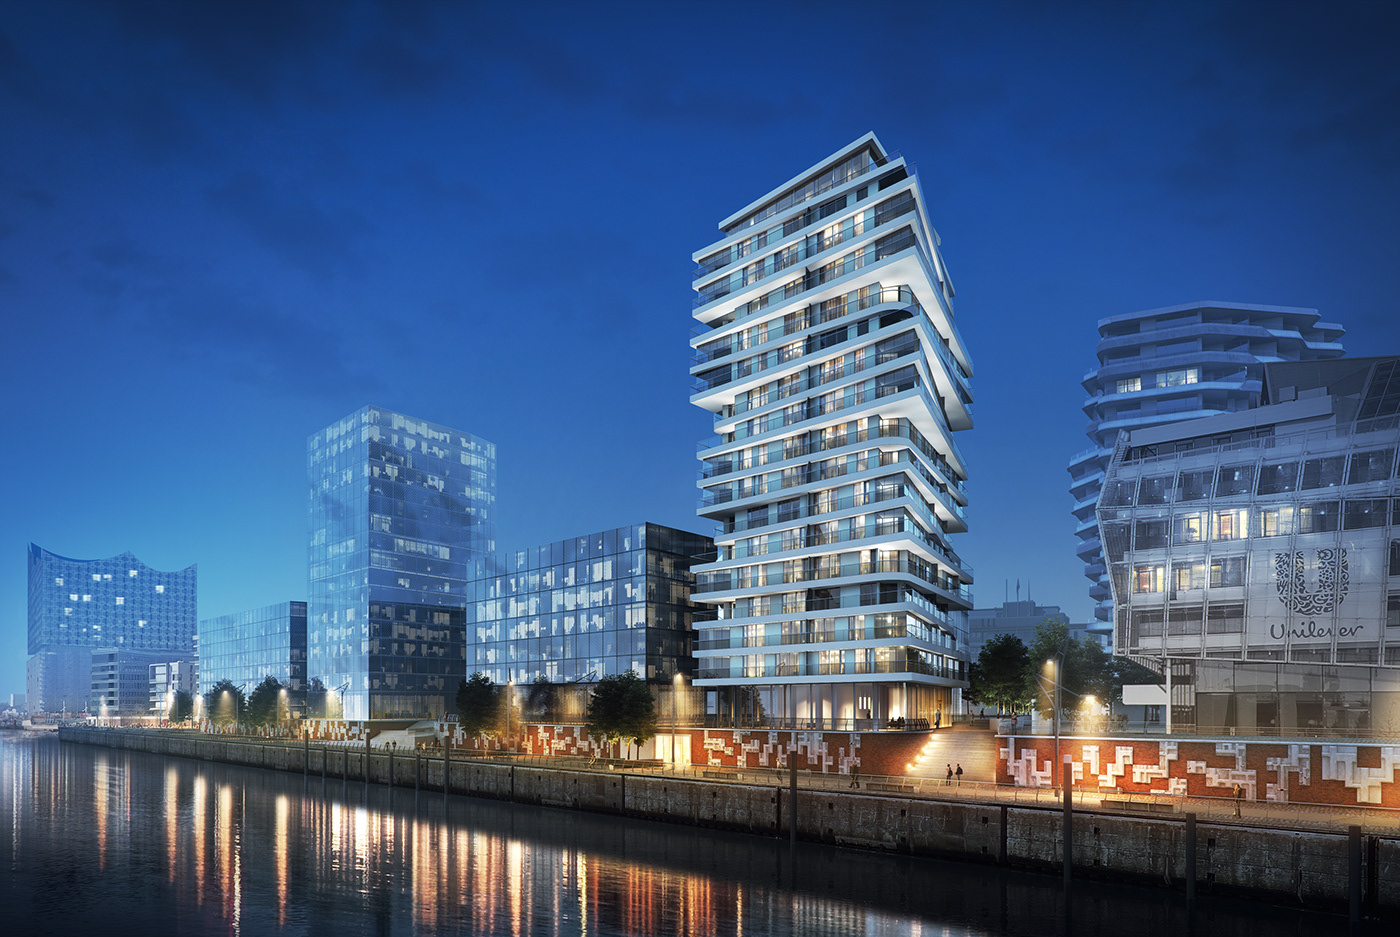 architecture visualization residential waterfront HAFEN CITY luxurious tower White modern Elbphilarmonie